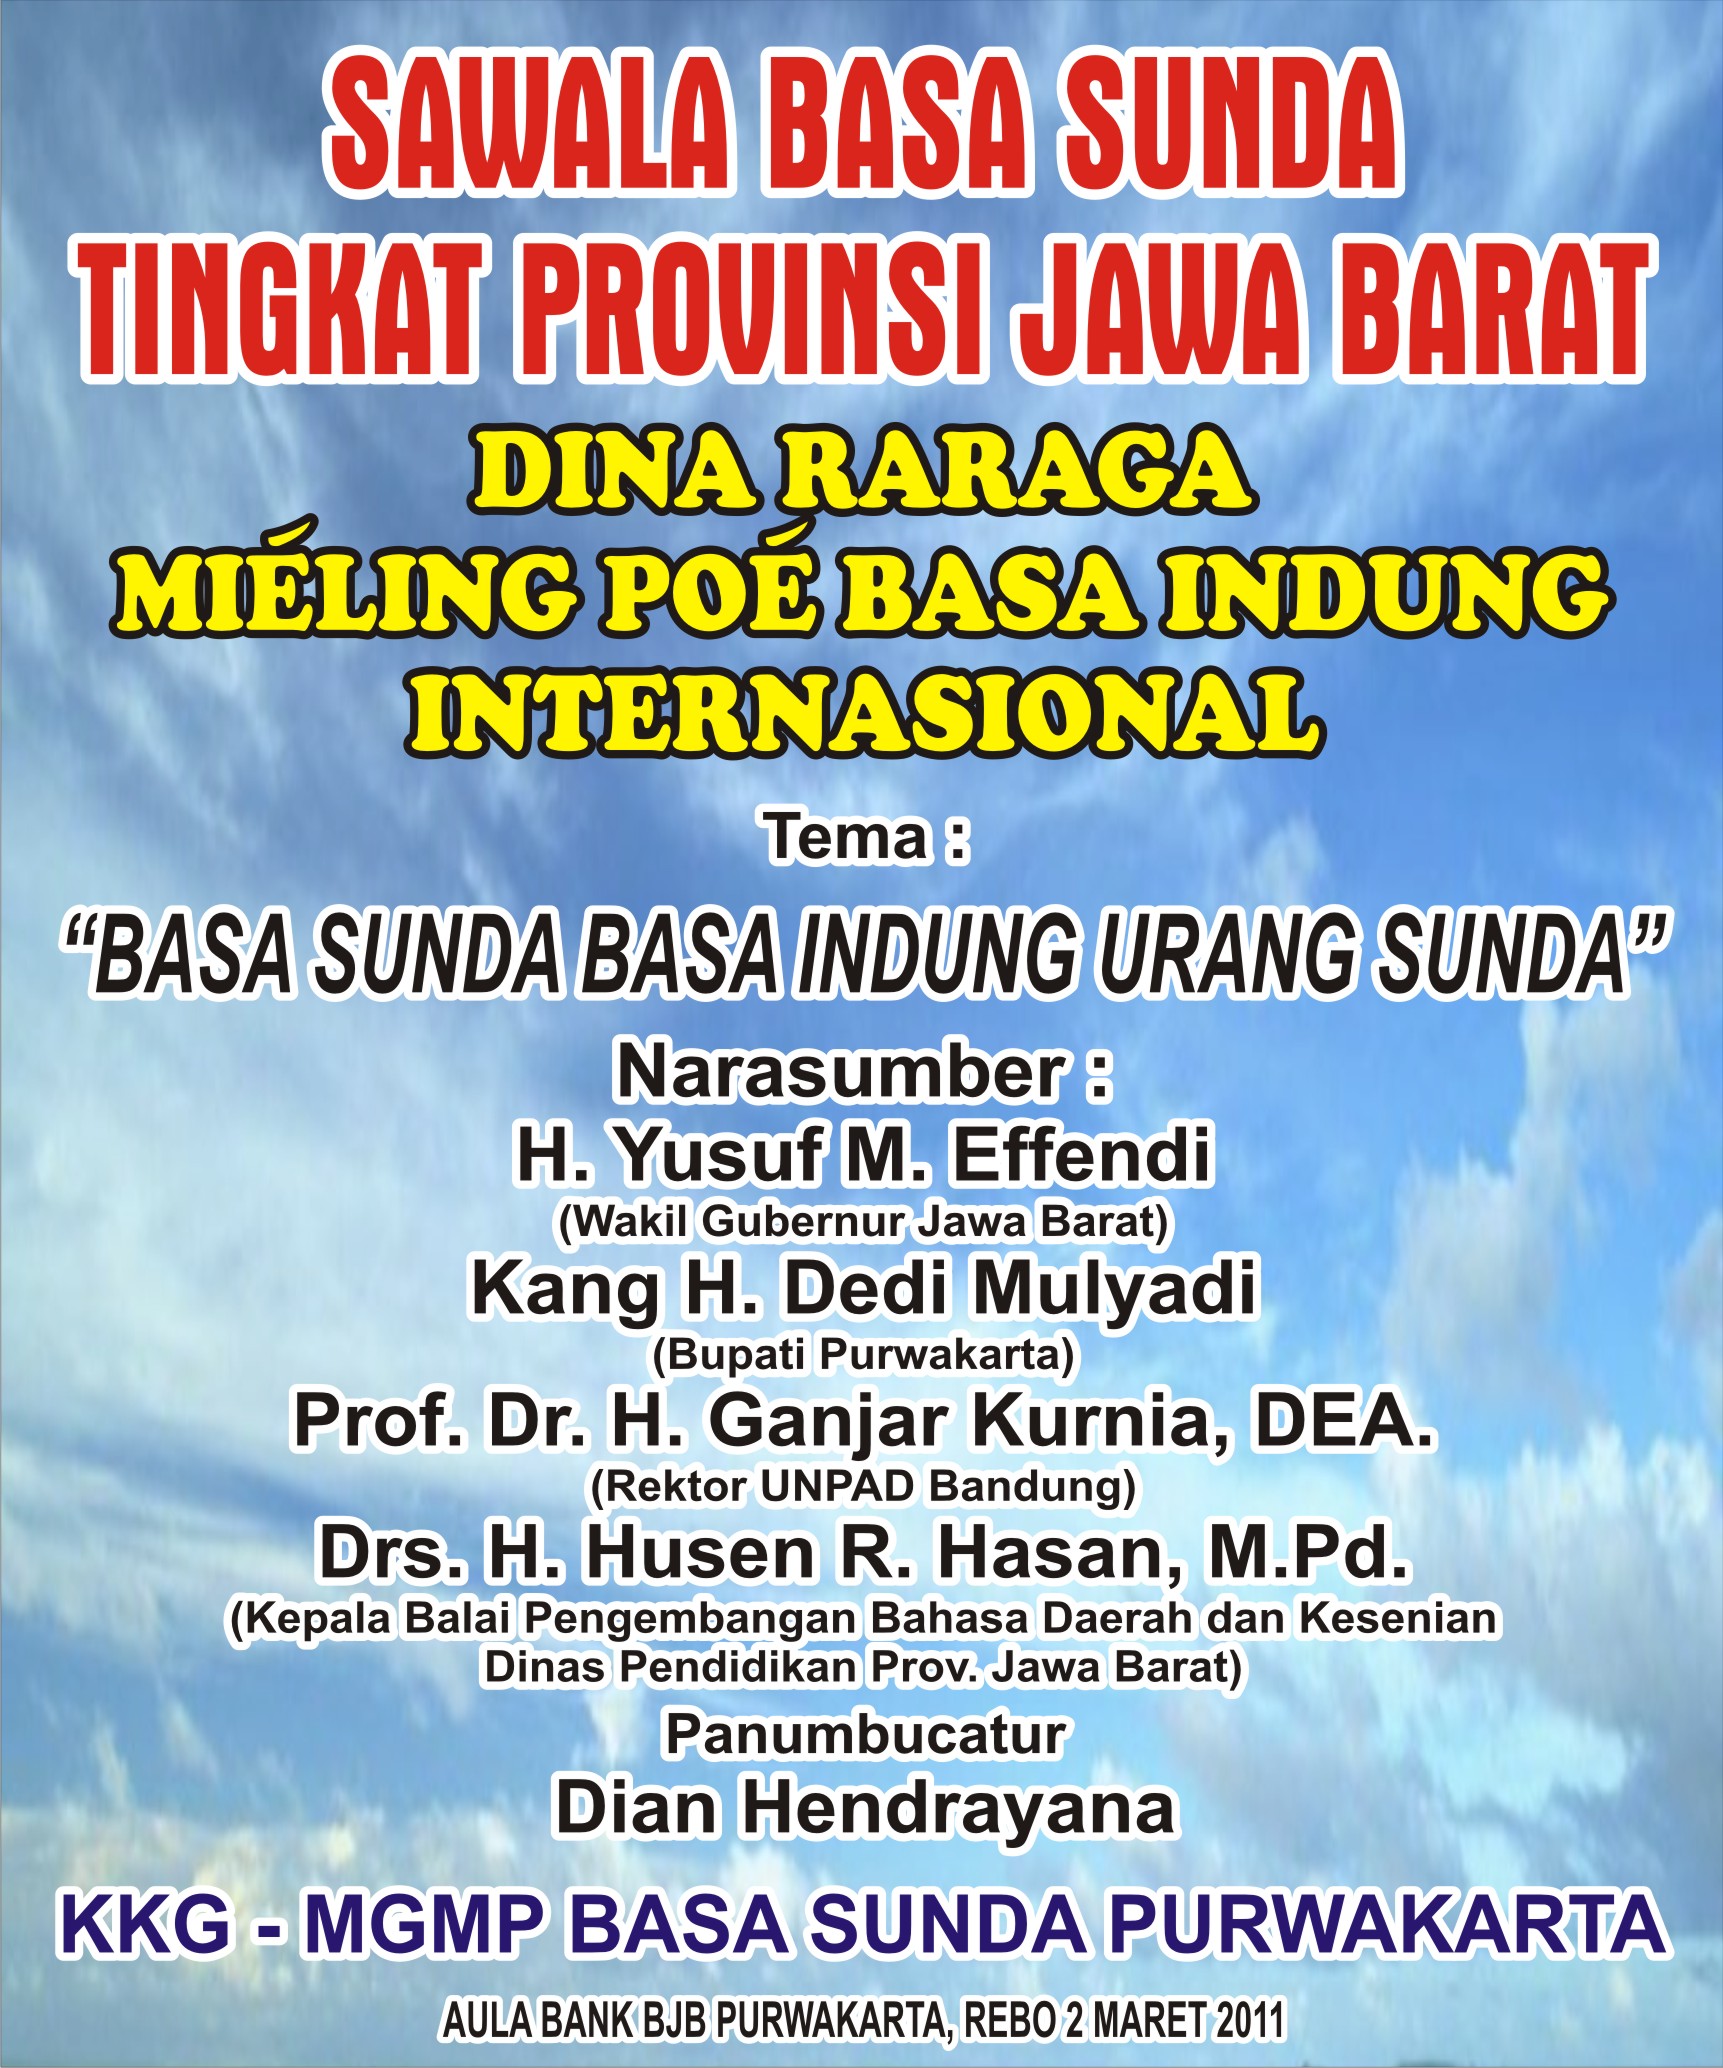 Teks Drama Dongeng Jawa Barat Dalam Bahasa Sunda Maomingdrysap25s